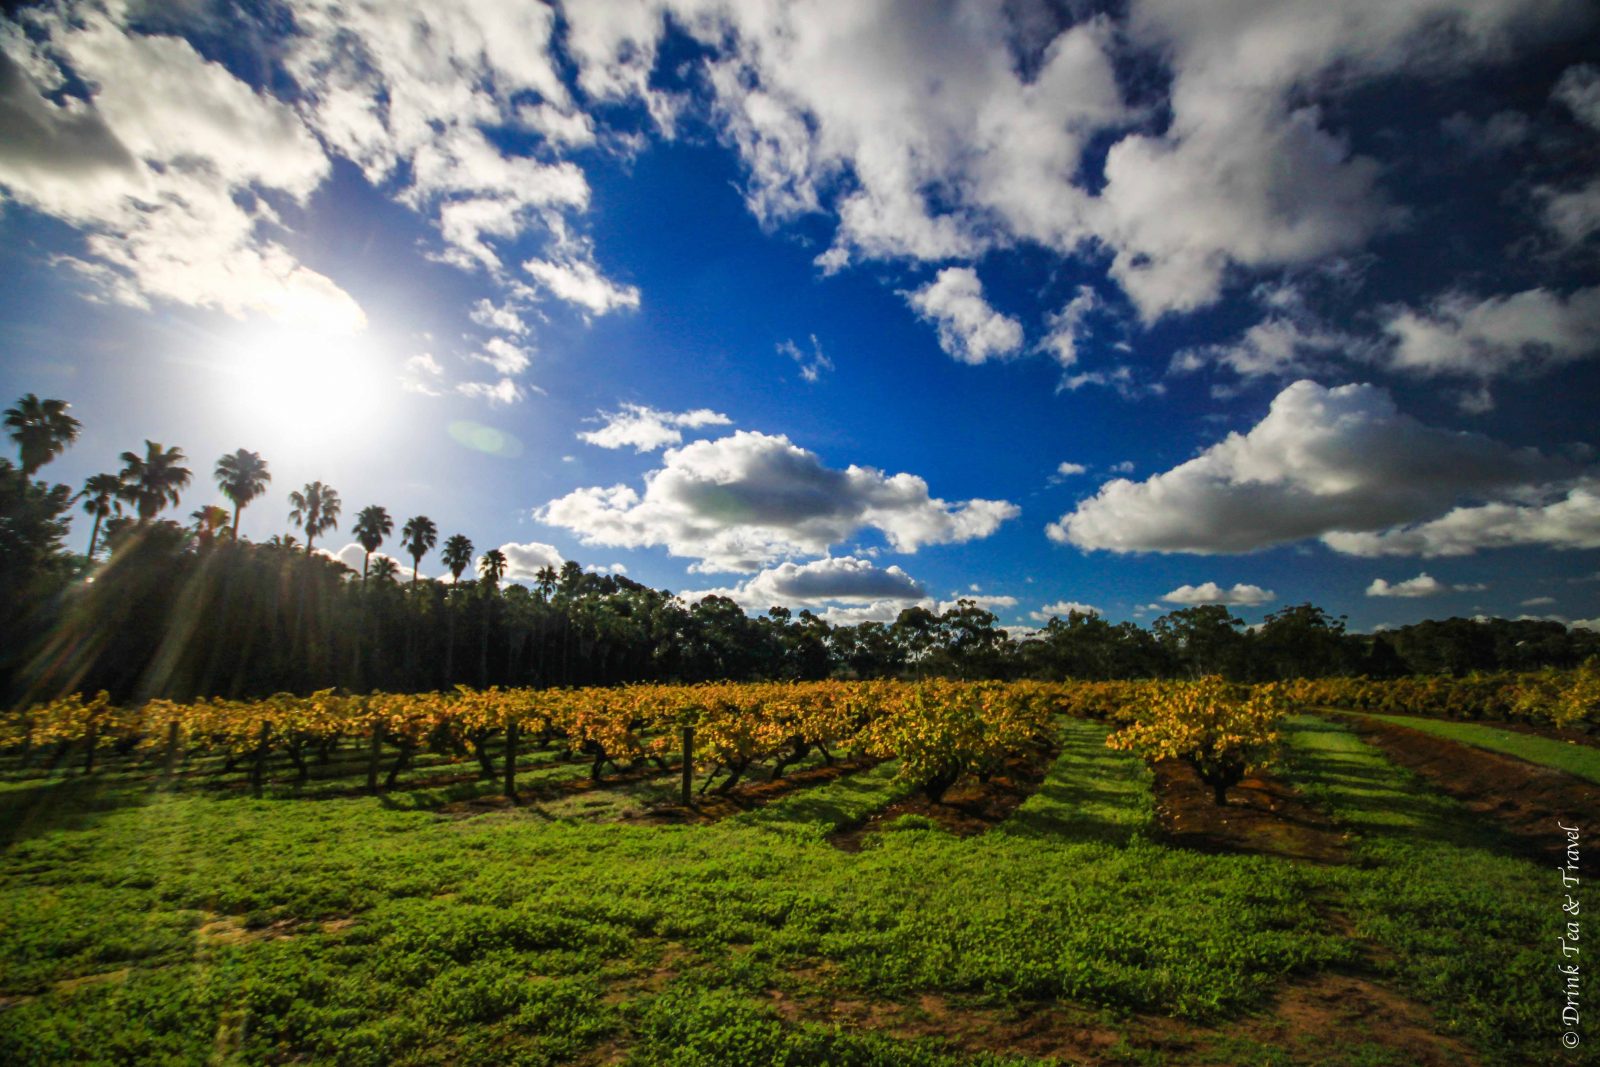 Top Things to do in Australia: 9. Go wine tasting in South Australia's Wine Regions